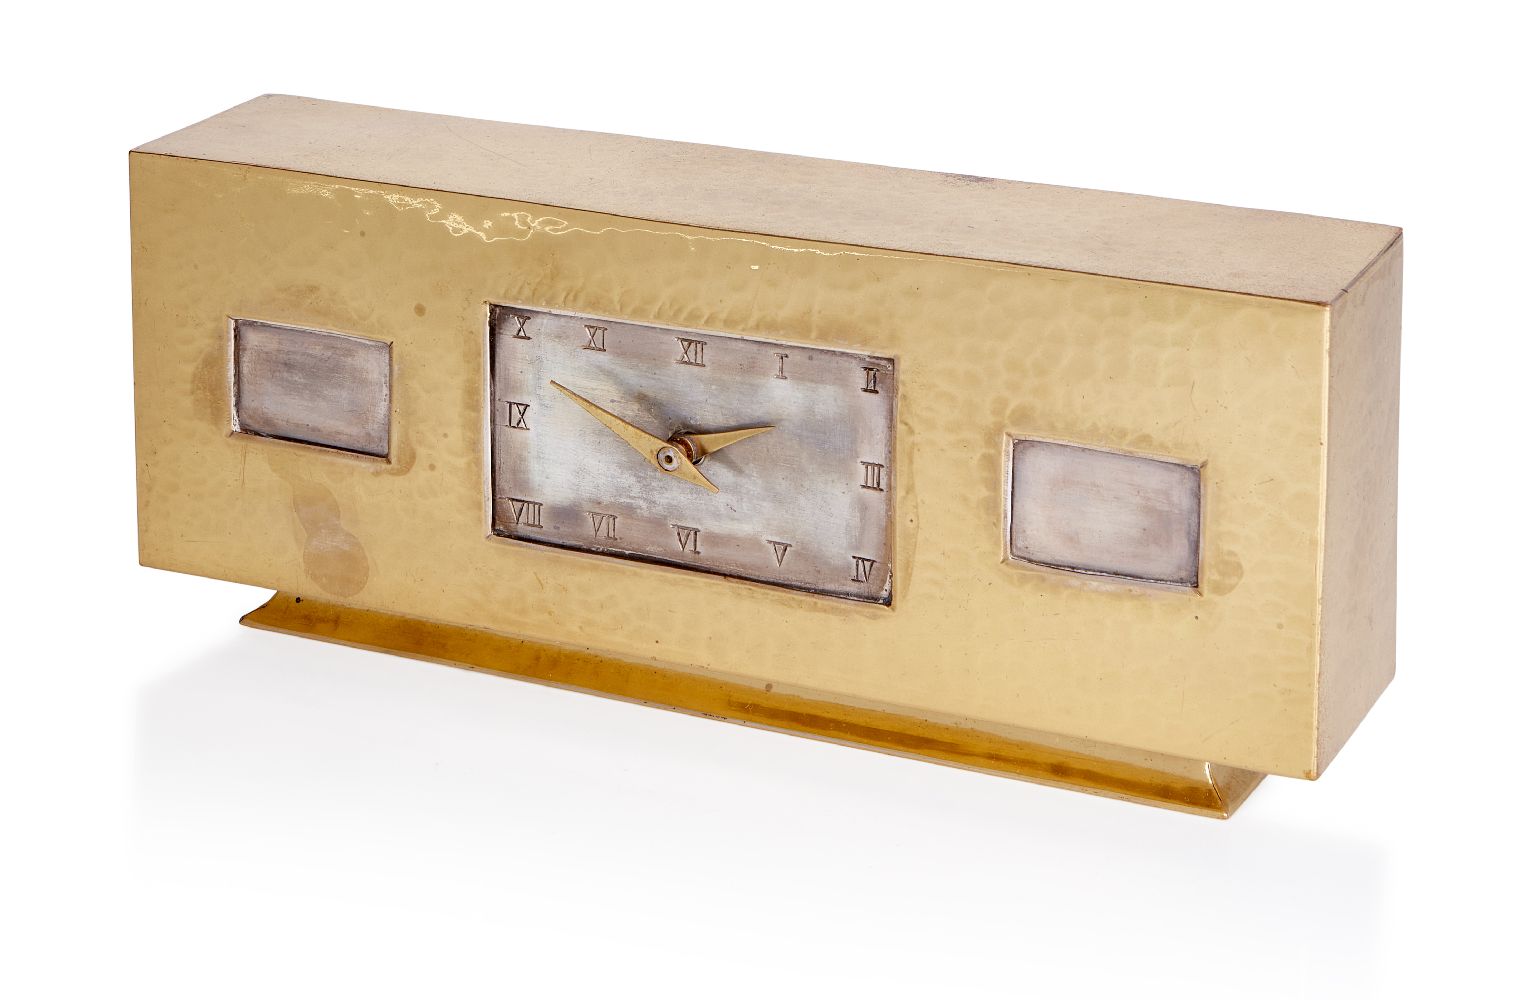 Designer Unknown, Bauhaus style mantel clock, circa 1930s, Silvered metal and hammered brass,